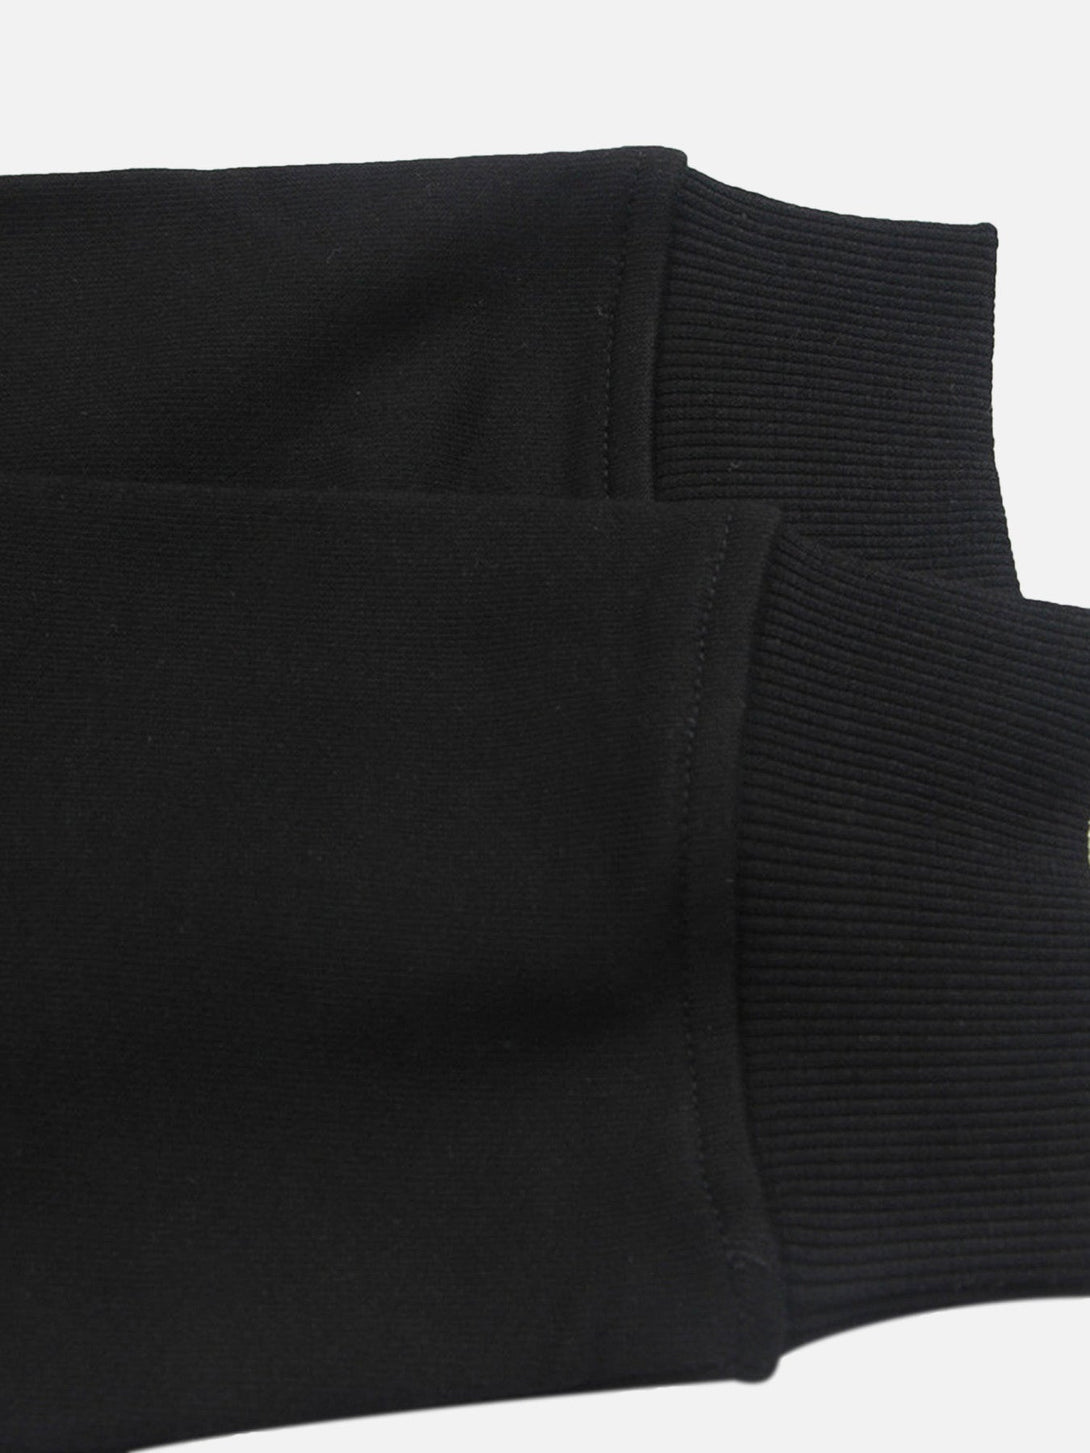 Majesda® - Blurred Silhouette Print Long Sleeve T-shirt- Outfit Ideas - Streetwear Fashion - majesda.com